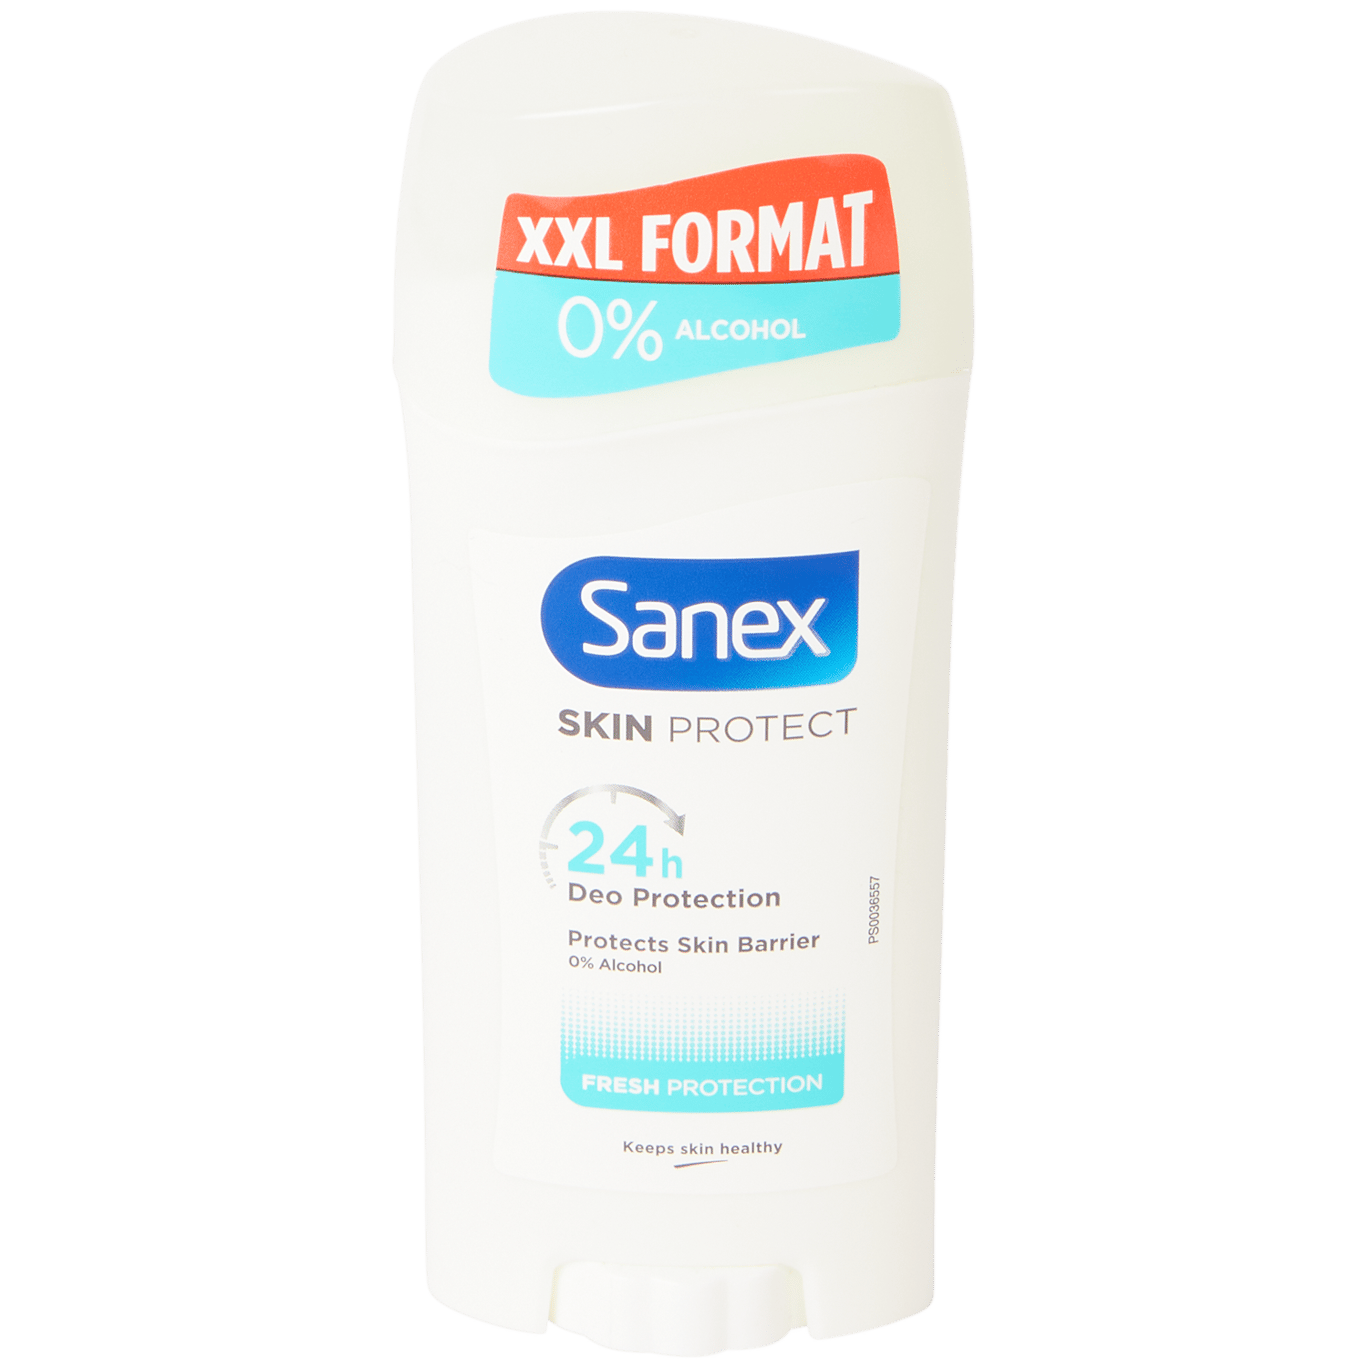 Sanex Skin Protect deodorantstick Fresh Protection